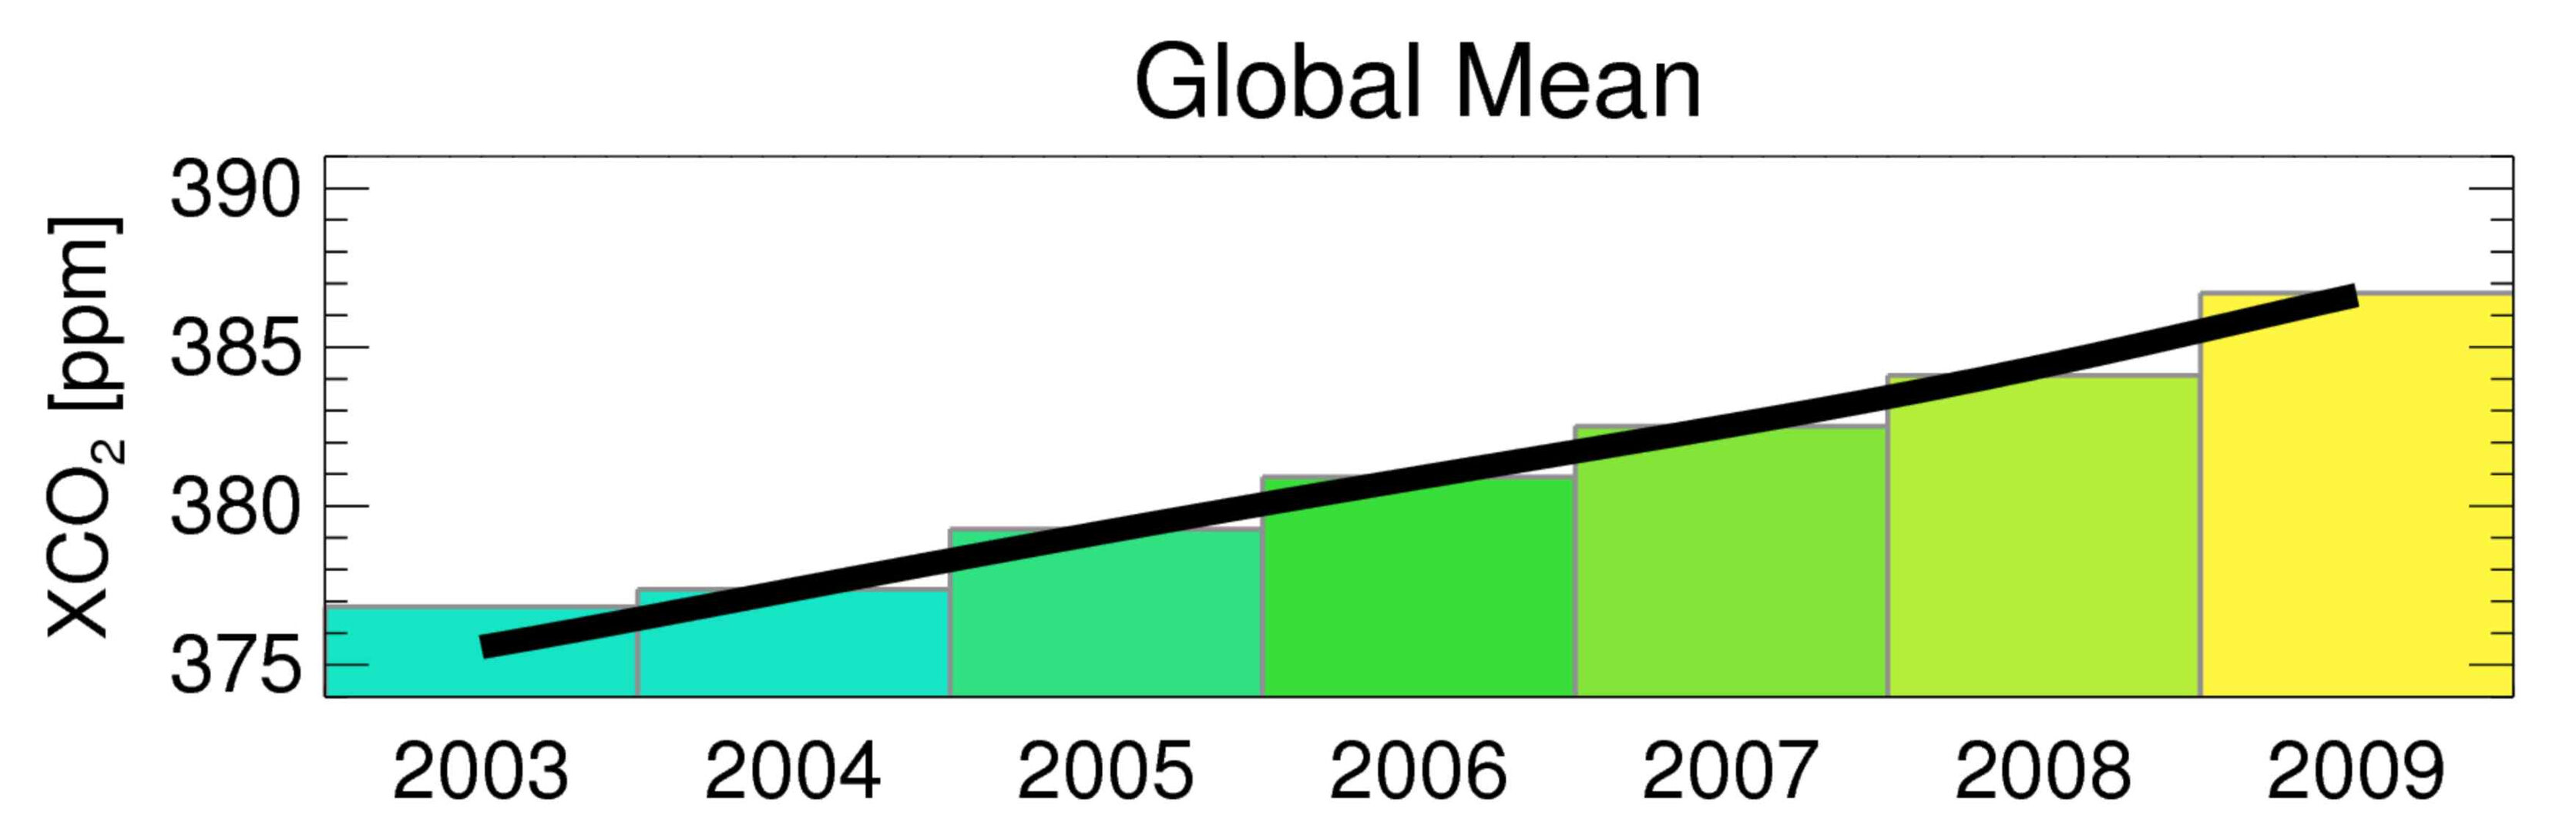 Increase in atmospheric CO2 between 2003 and 2009